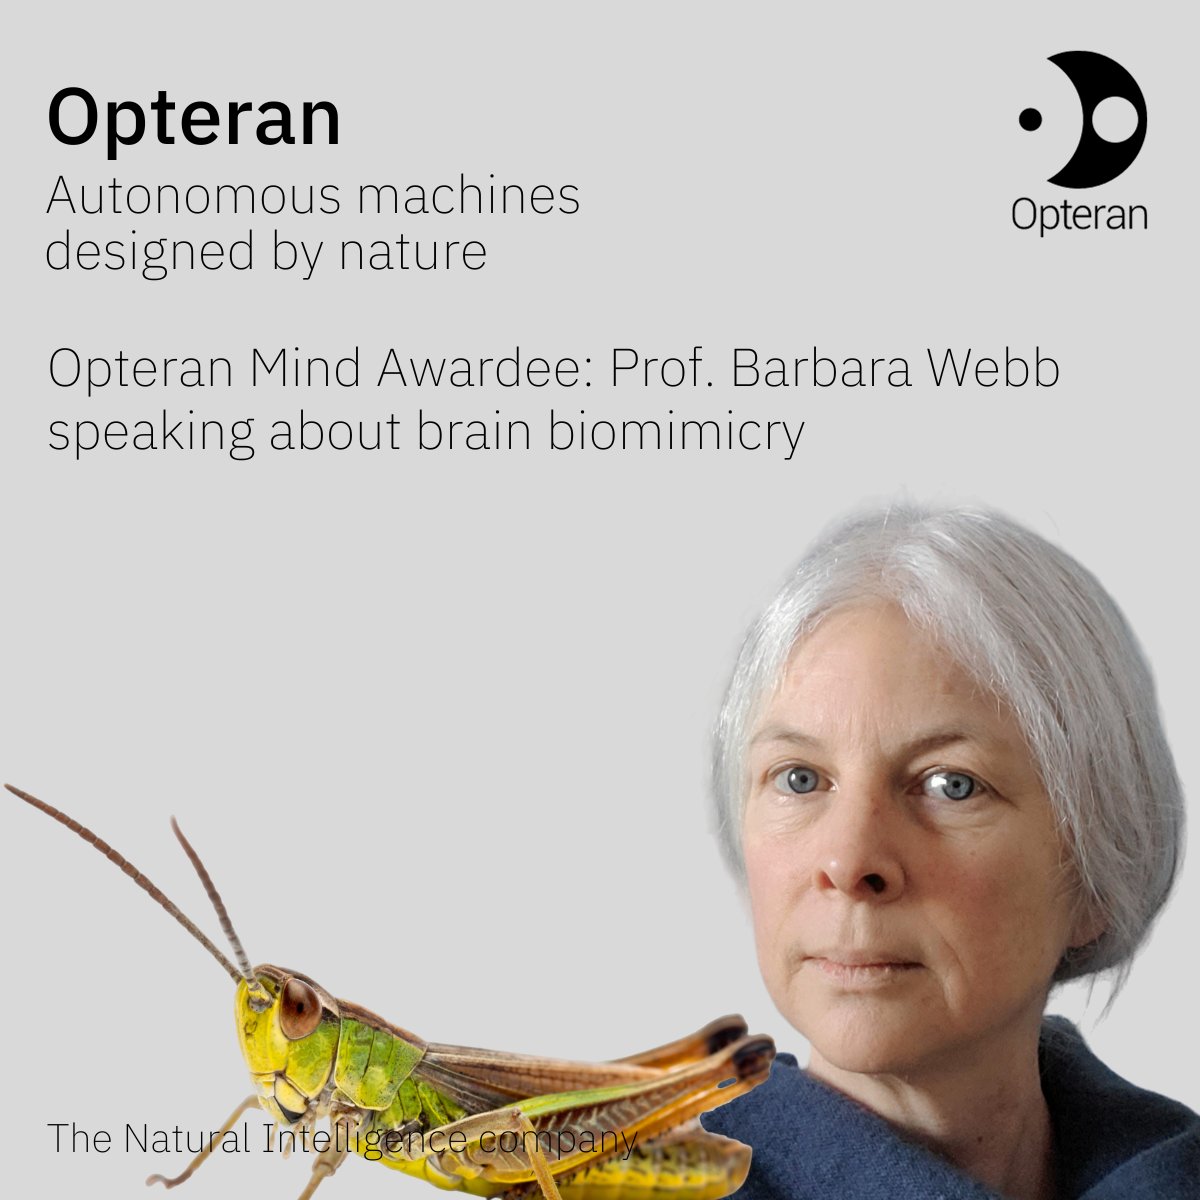 Worth a watch! lnkd.in/e96U5gUE Recording of Prof. Barbara Webb's talk at @Opteran Lab – 'Understanding the bee-line: the visual and neural mechanisms of insect navigation' #SLAM #Robotics #NaturalIntelligence #AdaLovelaceDay #WomenInSTEM